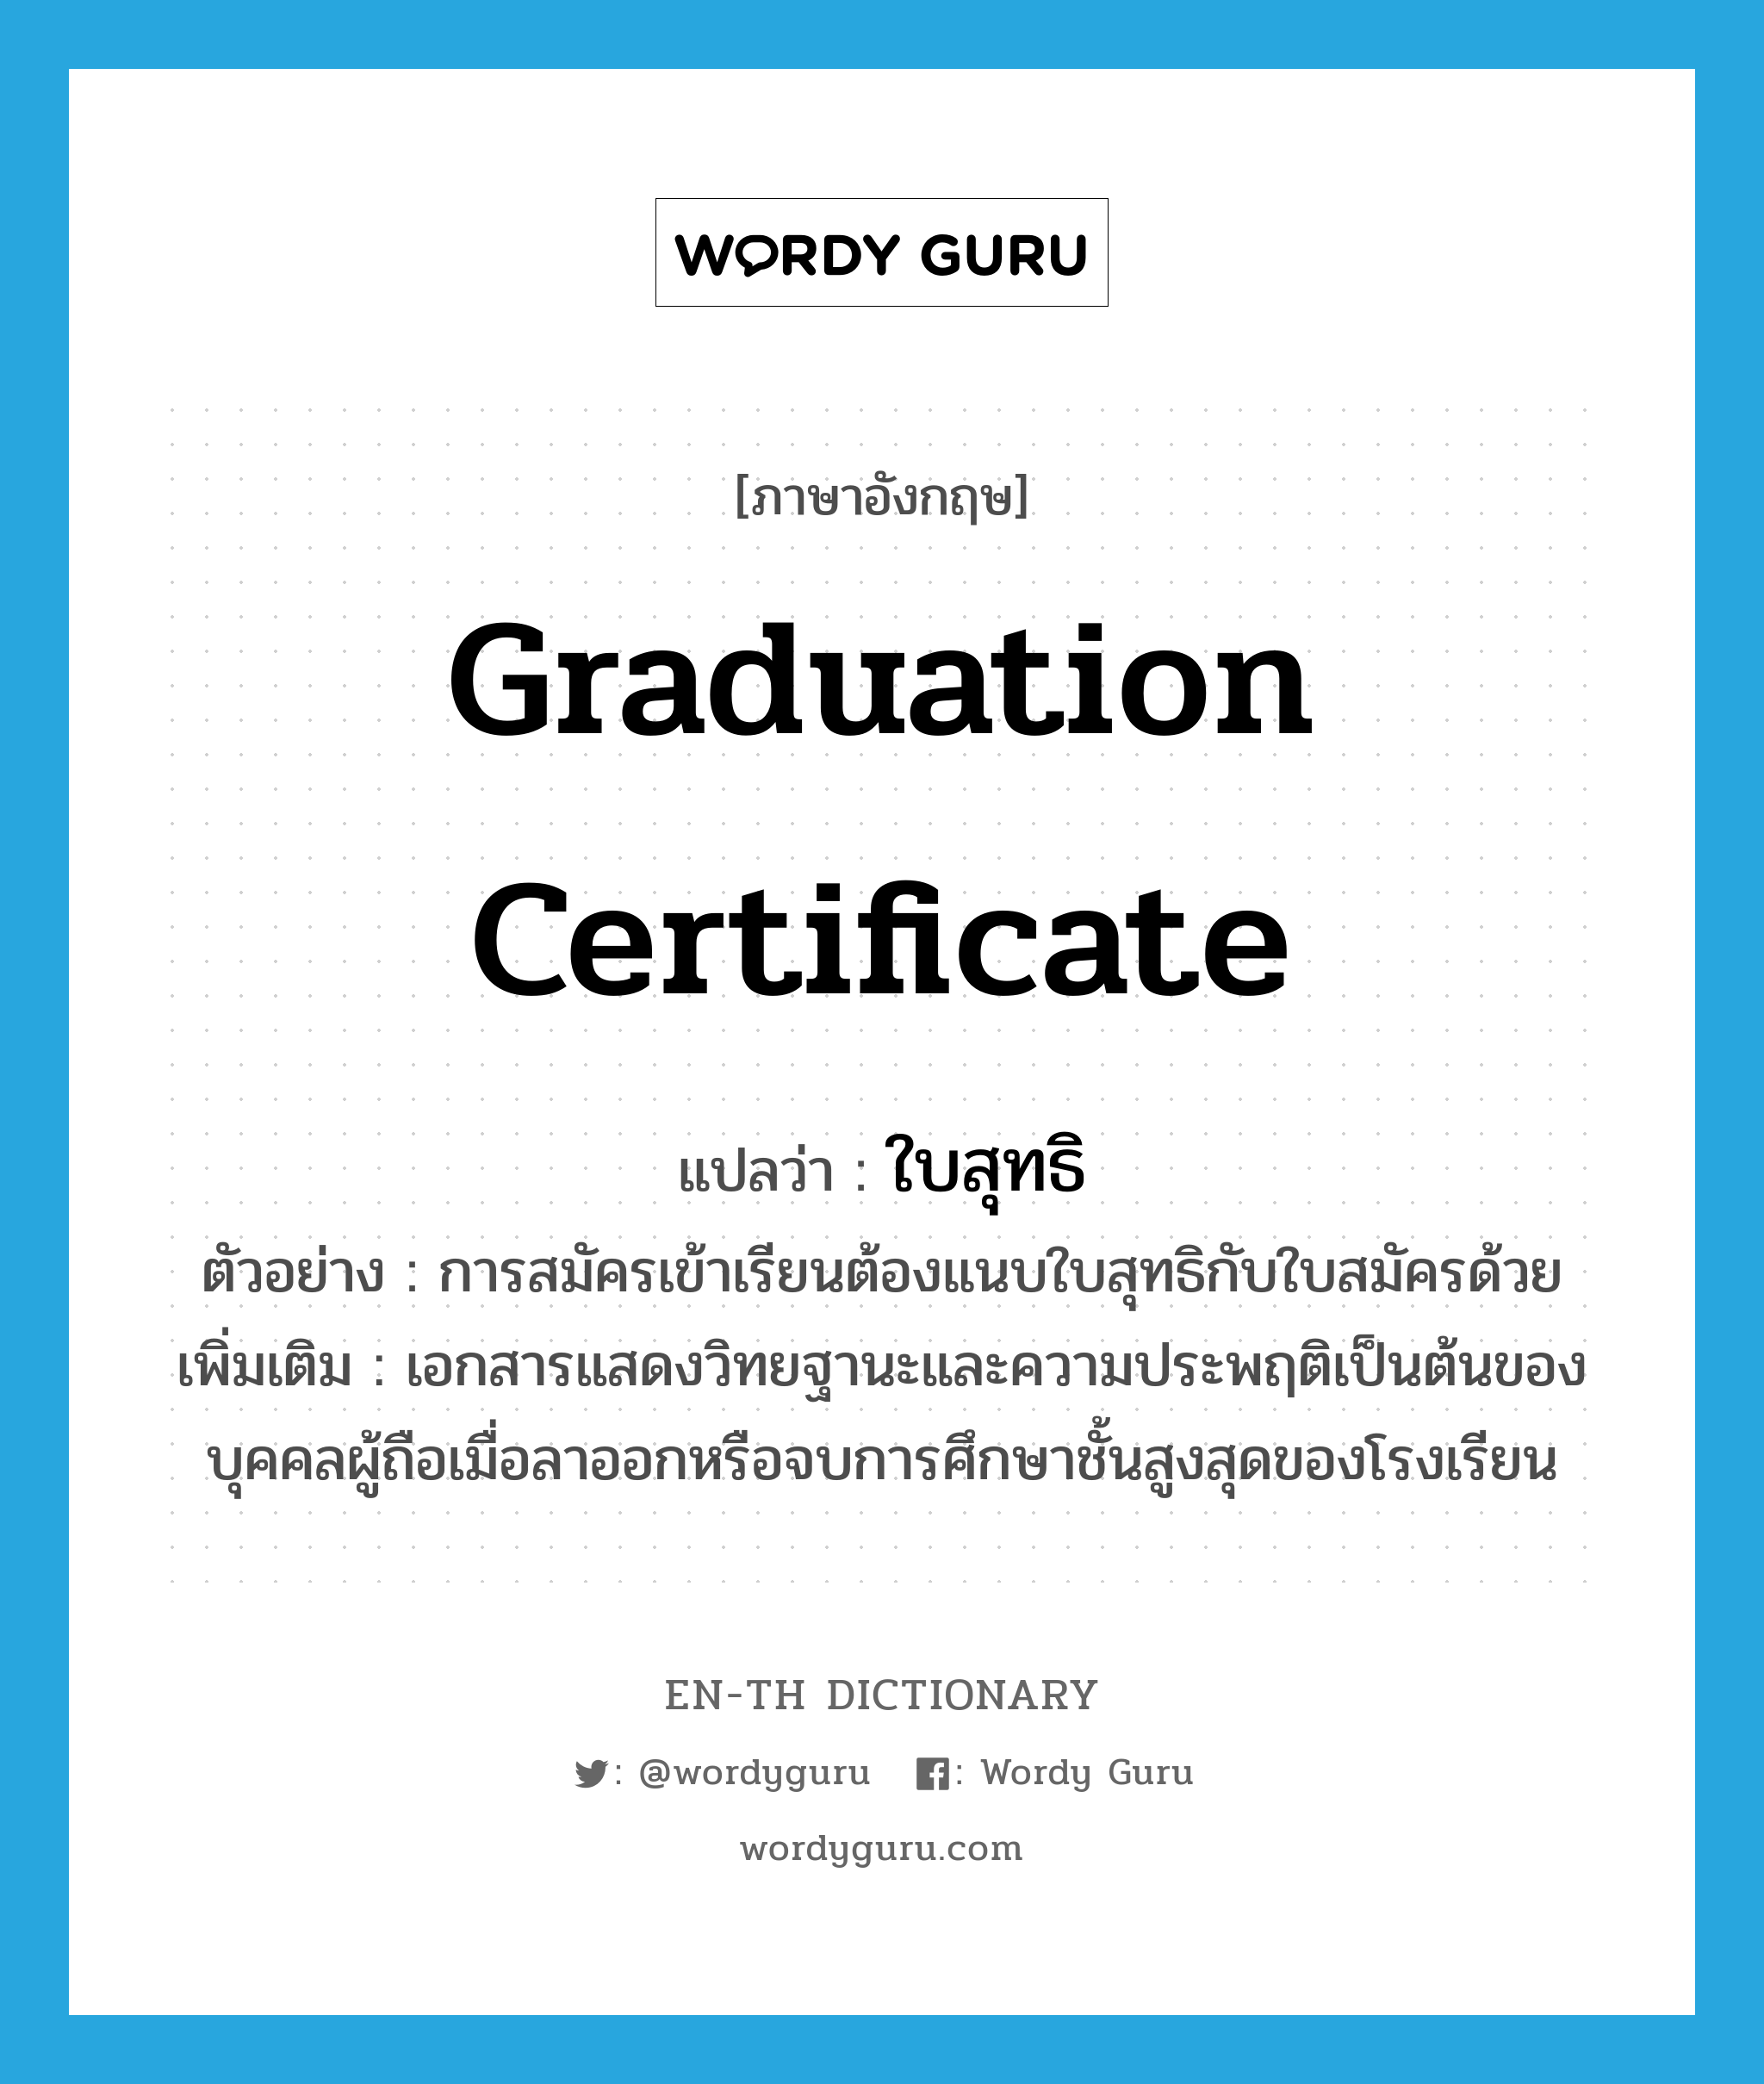 graduation certificate แปลว่า?, คำศัพท์ภาษาอังกฤษ graduation certificate แปลว่า ใบสุทธิ ประเภท N ตัวอย่าง การสมัครเข้าเรียนต้องแนบใบสุทธิกับใบสมัครด้วย เพิ่มเติม เอกสารแสดงวิทยฐานะและความประพฤติเป็นต้นของบุคคลผู้ถือเมื่อลาออกหรือจบการศึกษาชั้นสูงสุดของโรงเรียน หมวด N